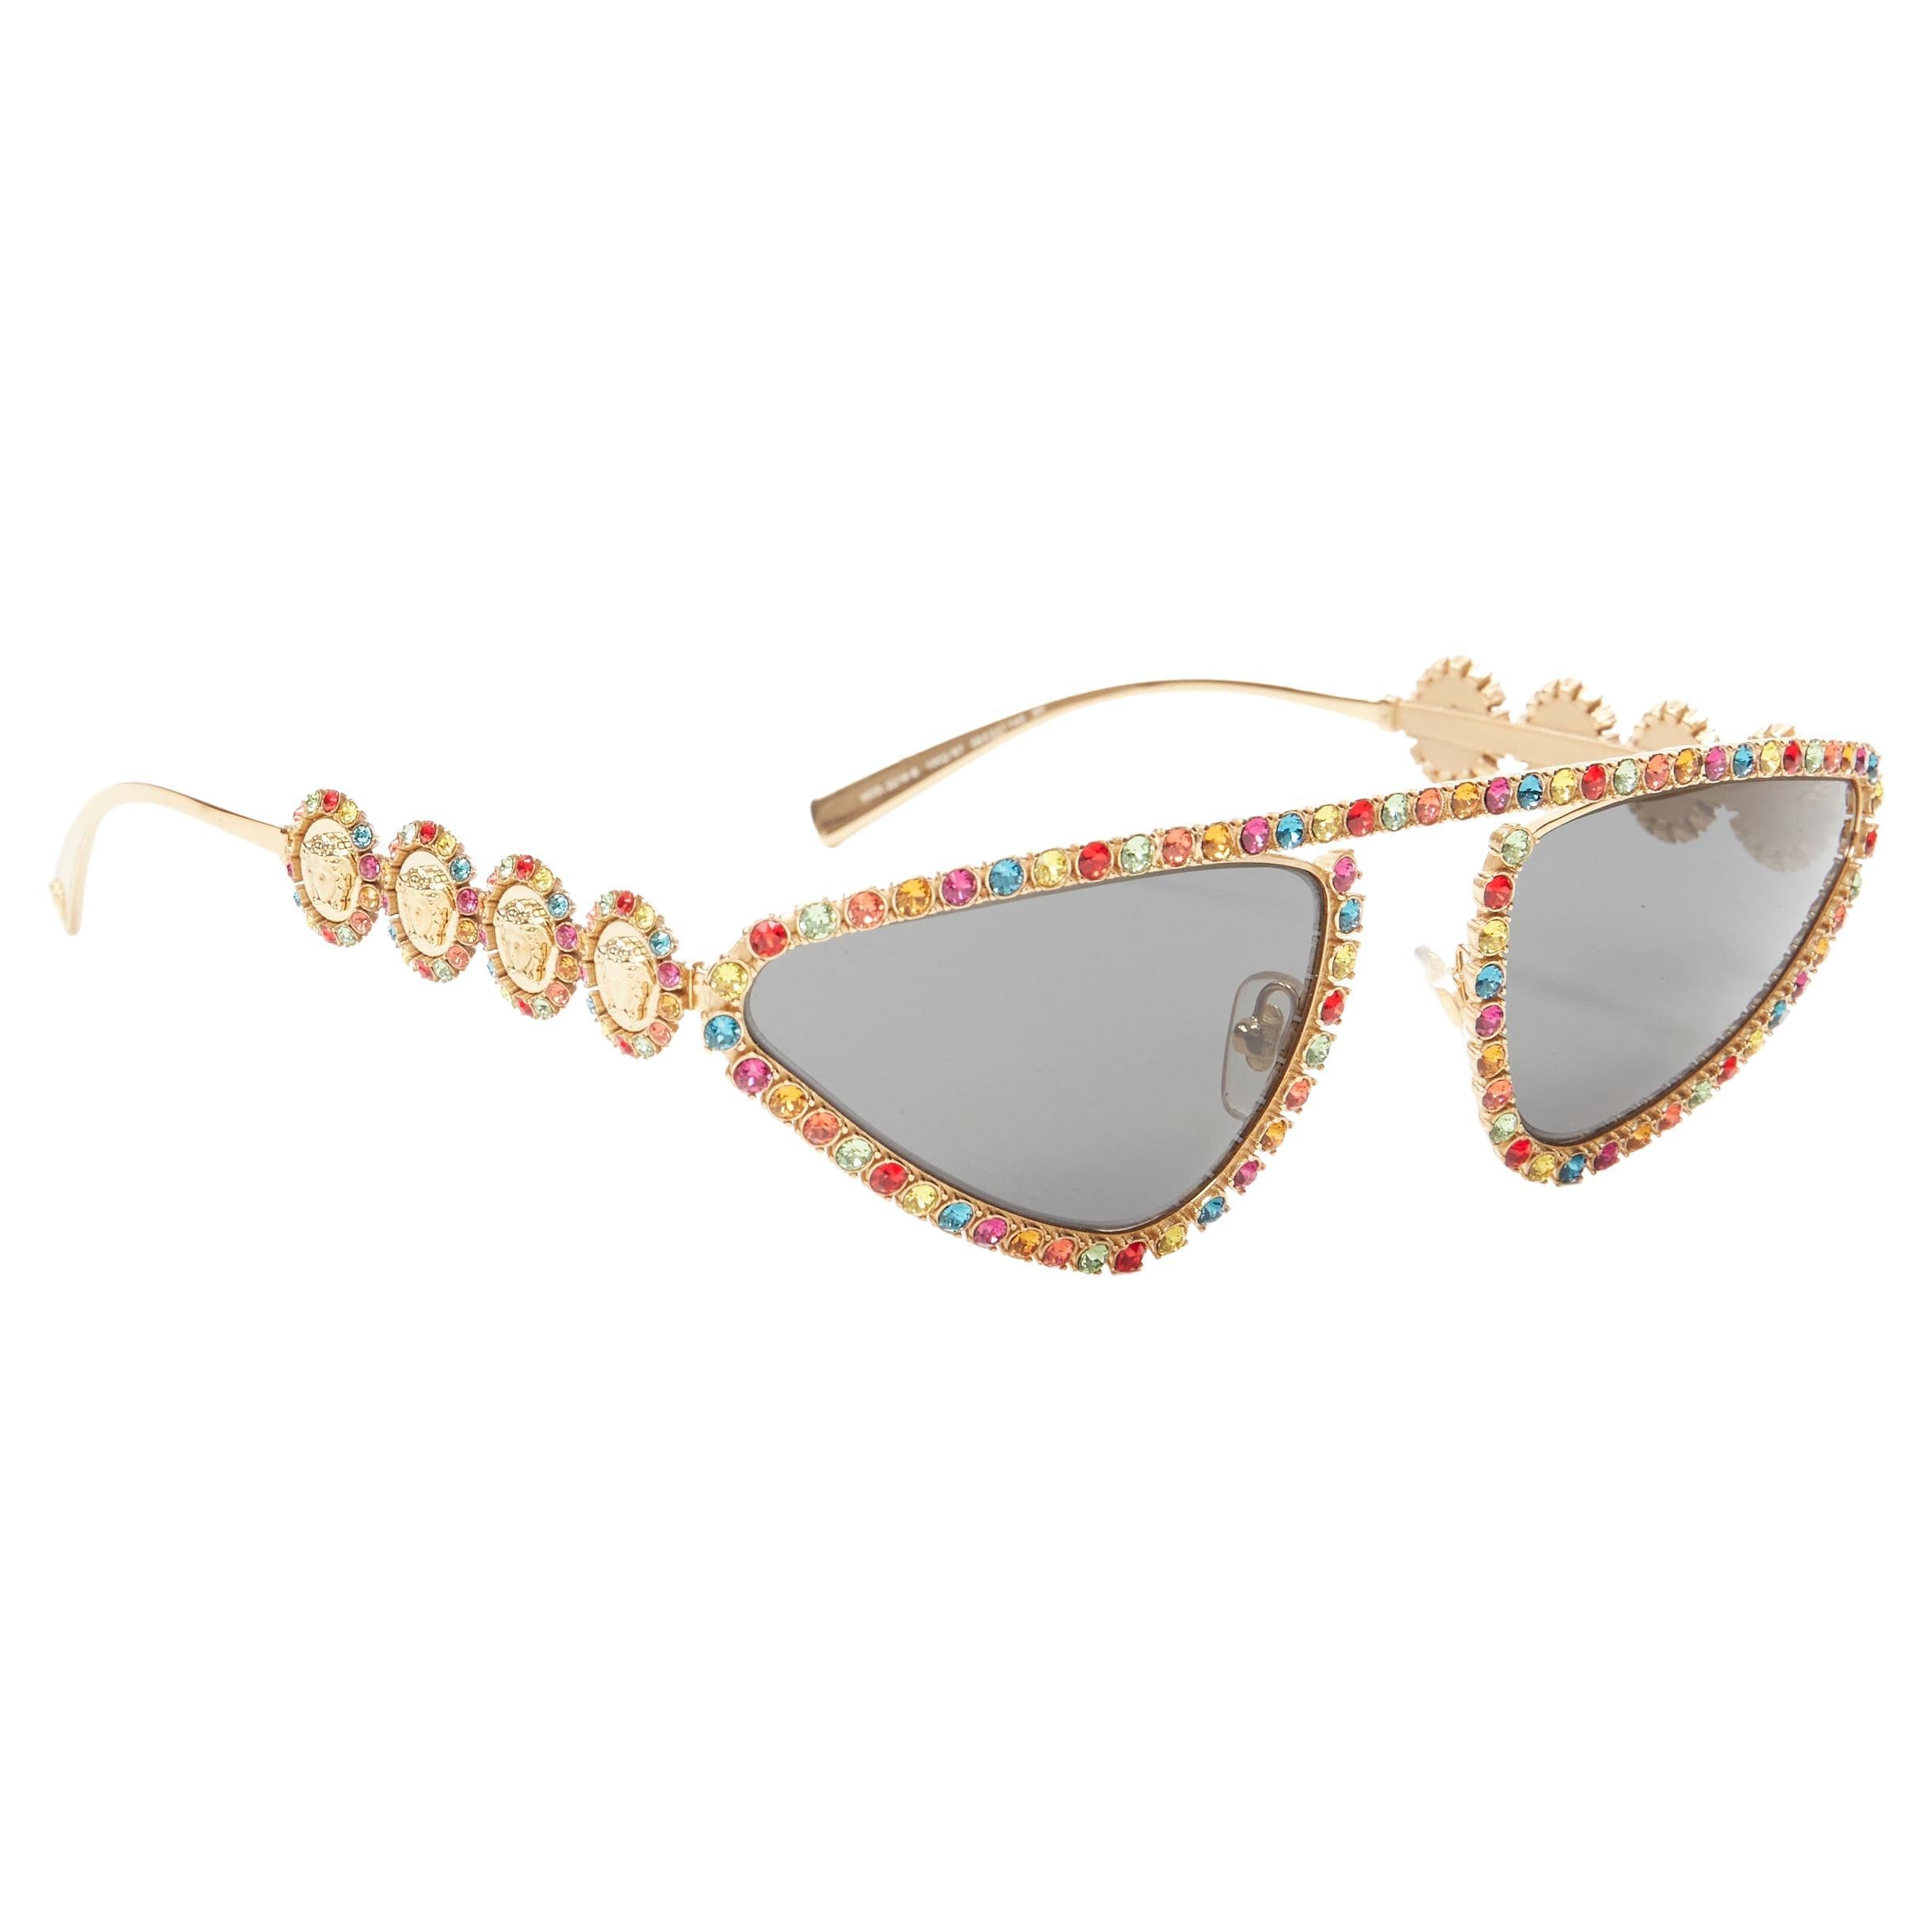 Versace Wraparound Silver Tone Mirrored Sunglasses W Crystal Greek Keys ...